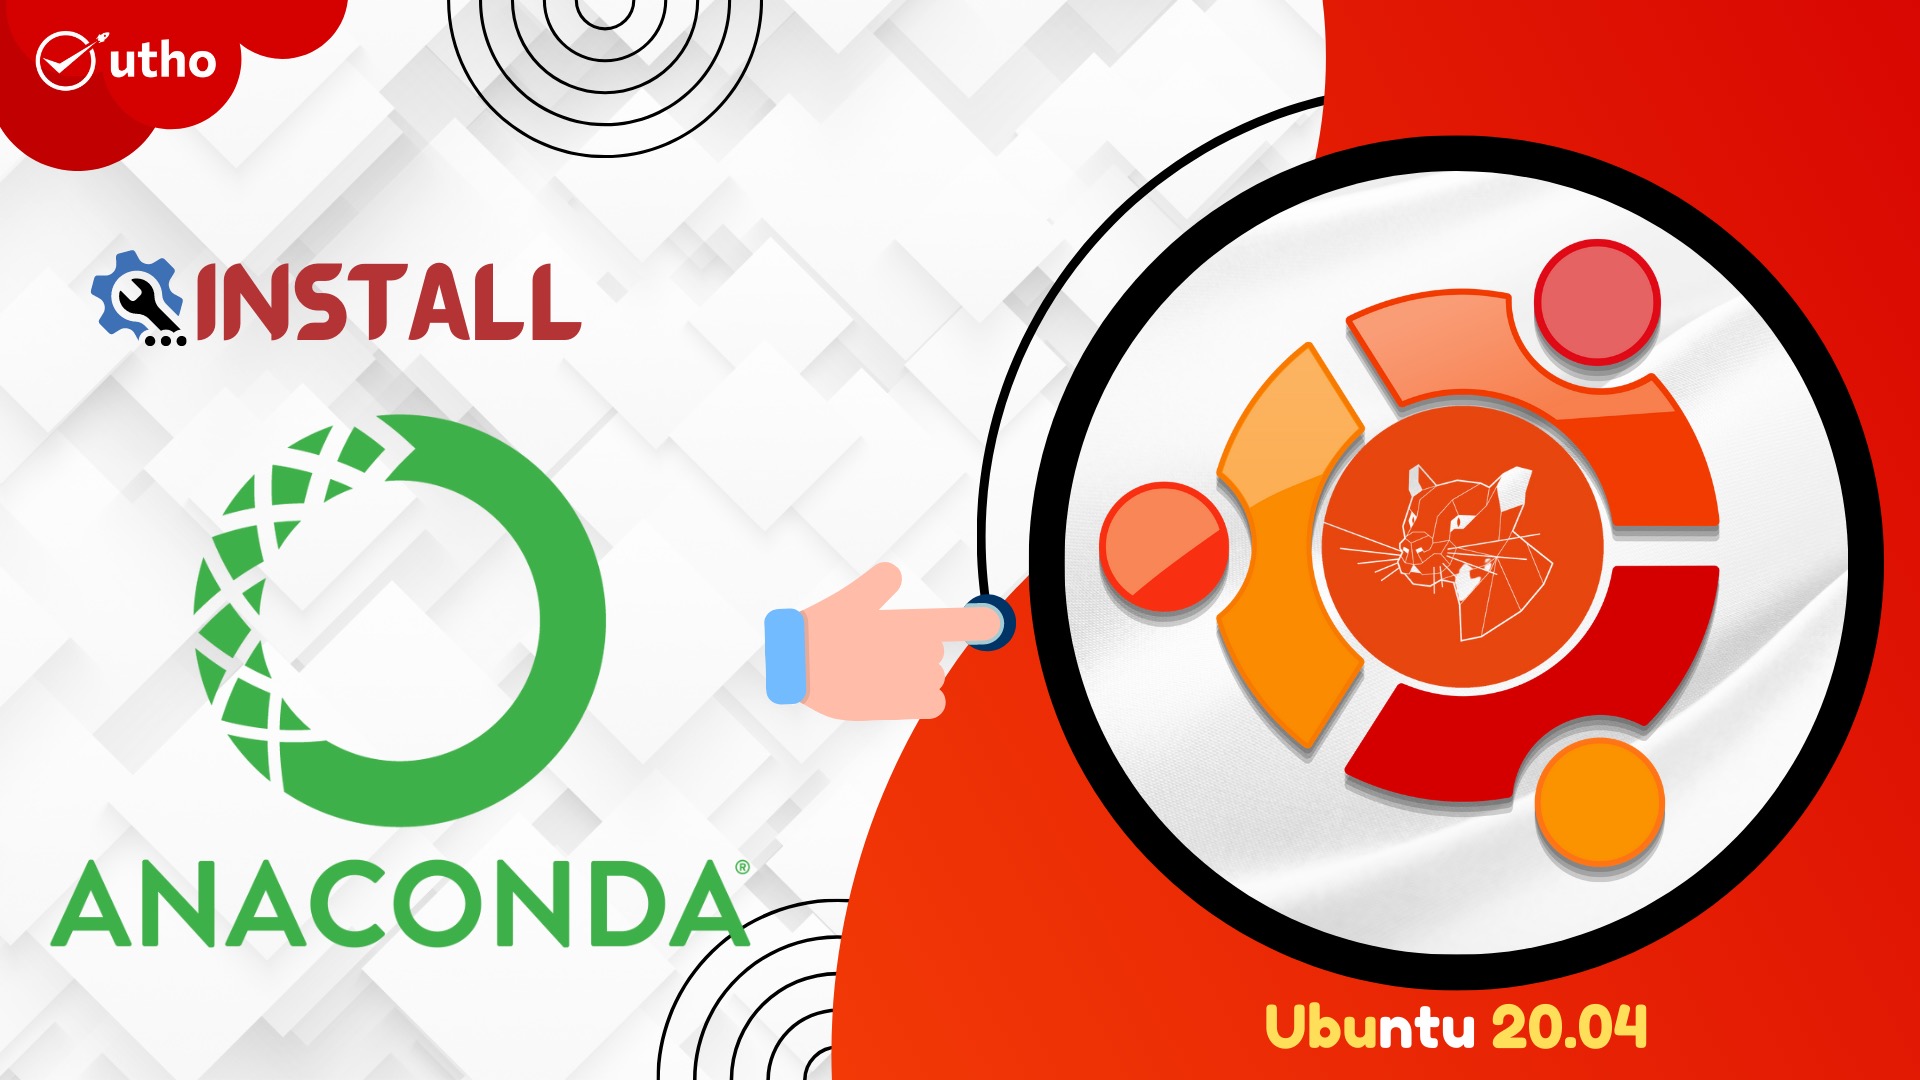 How to Install Anaconda on Ubuntu 20.04 LTS